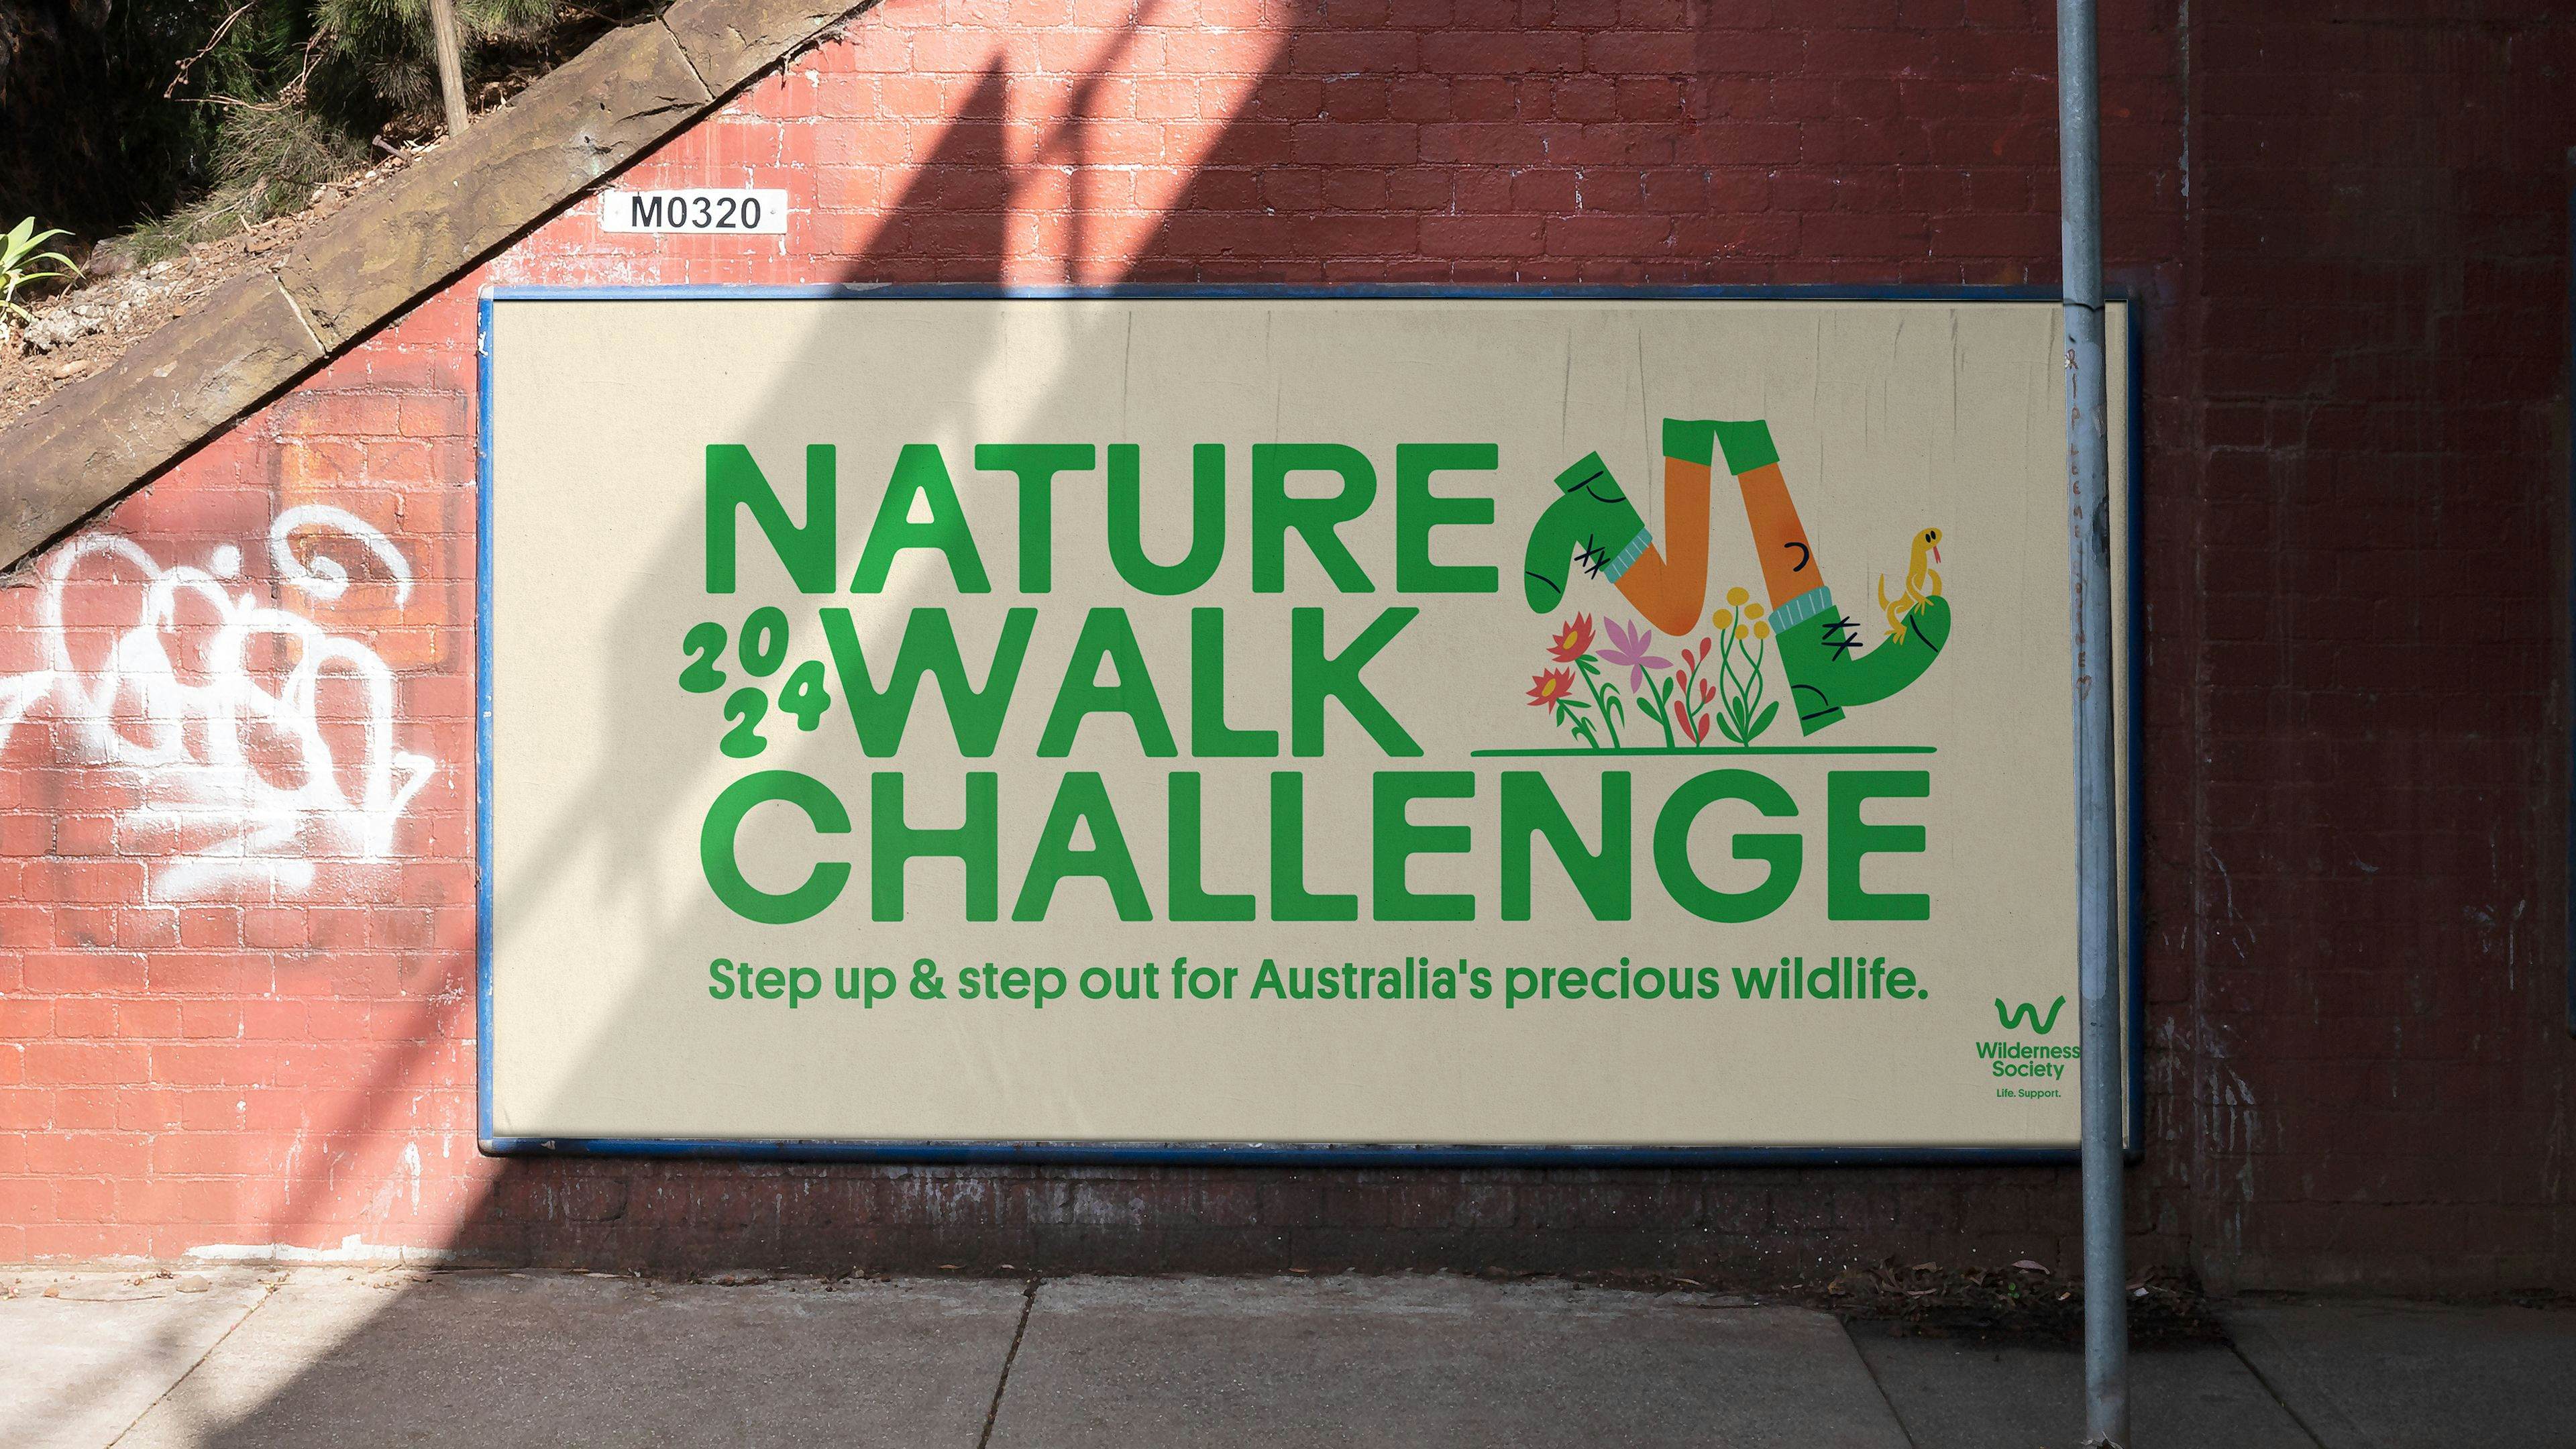 Wilderness Society Nature Walk Challenge by Alter